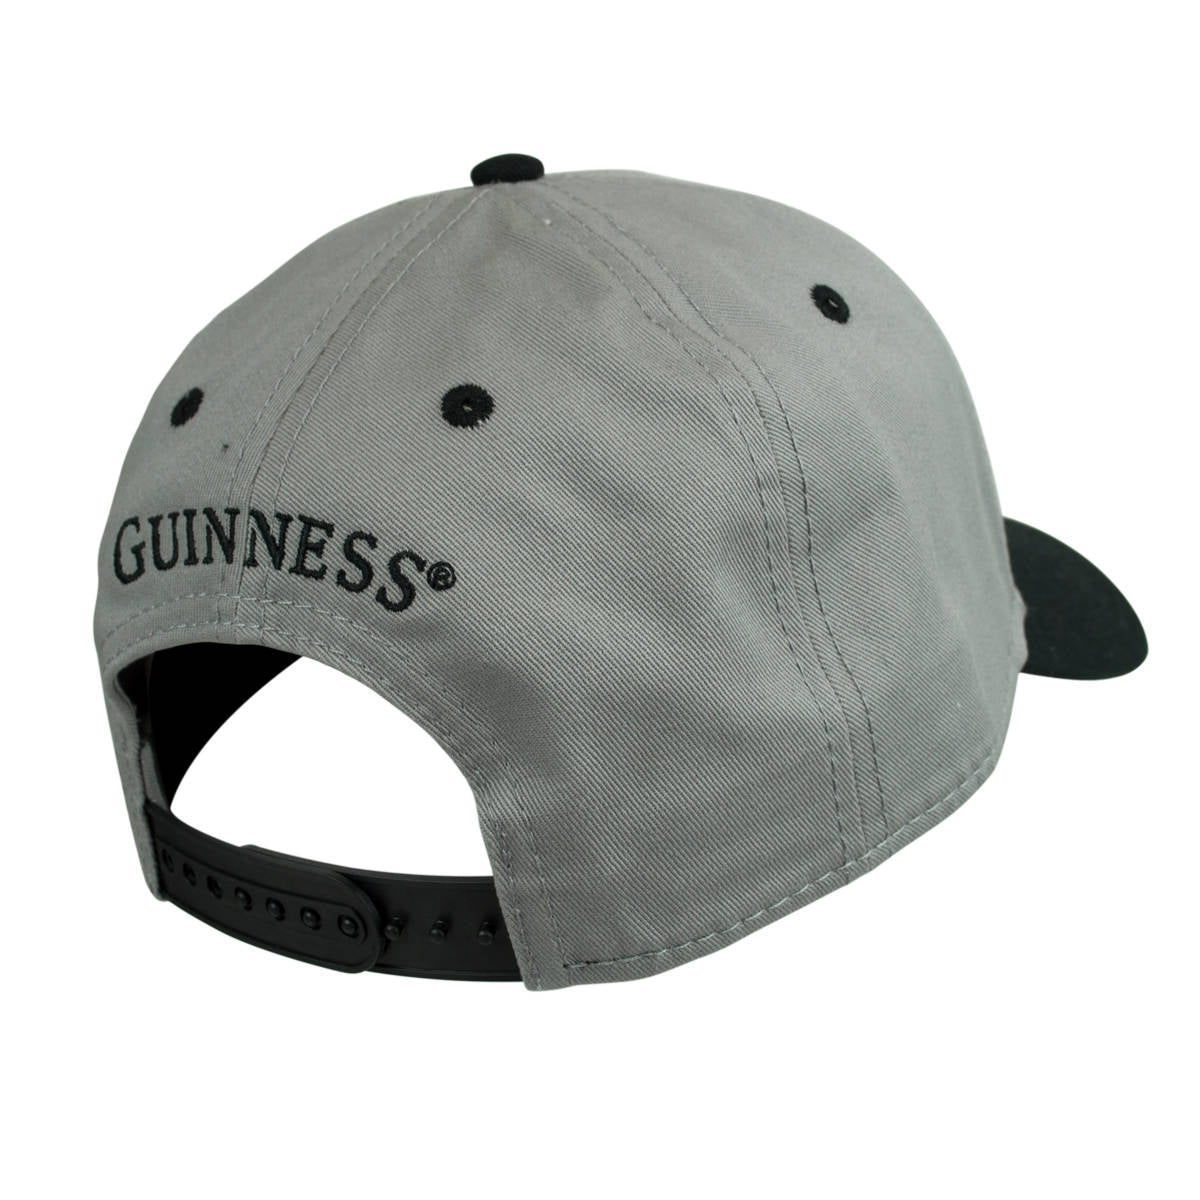 Guinness Grey 59 Baseball Cap (Adjustable)